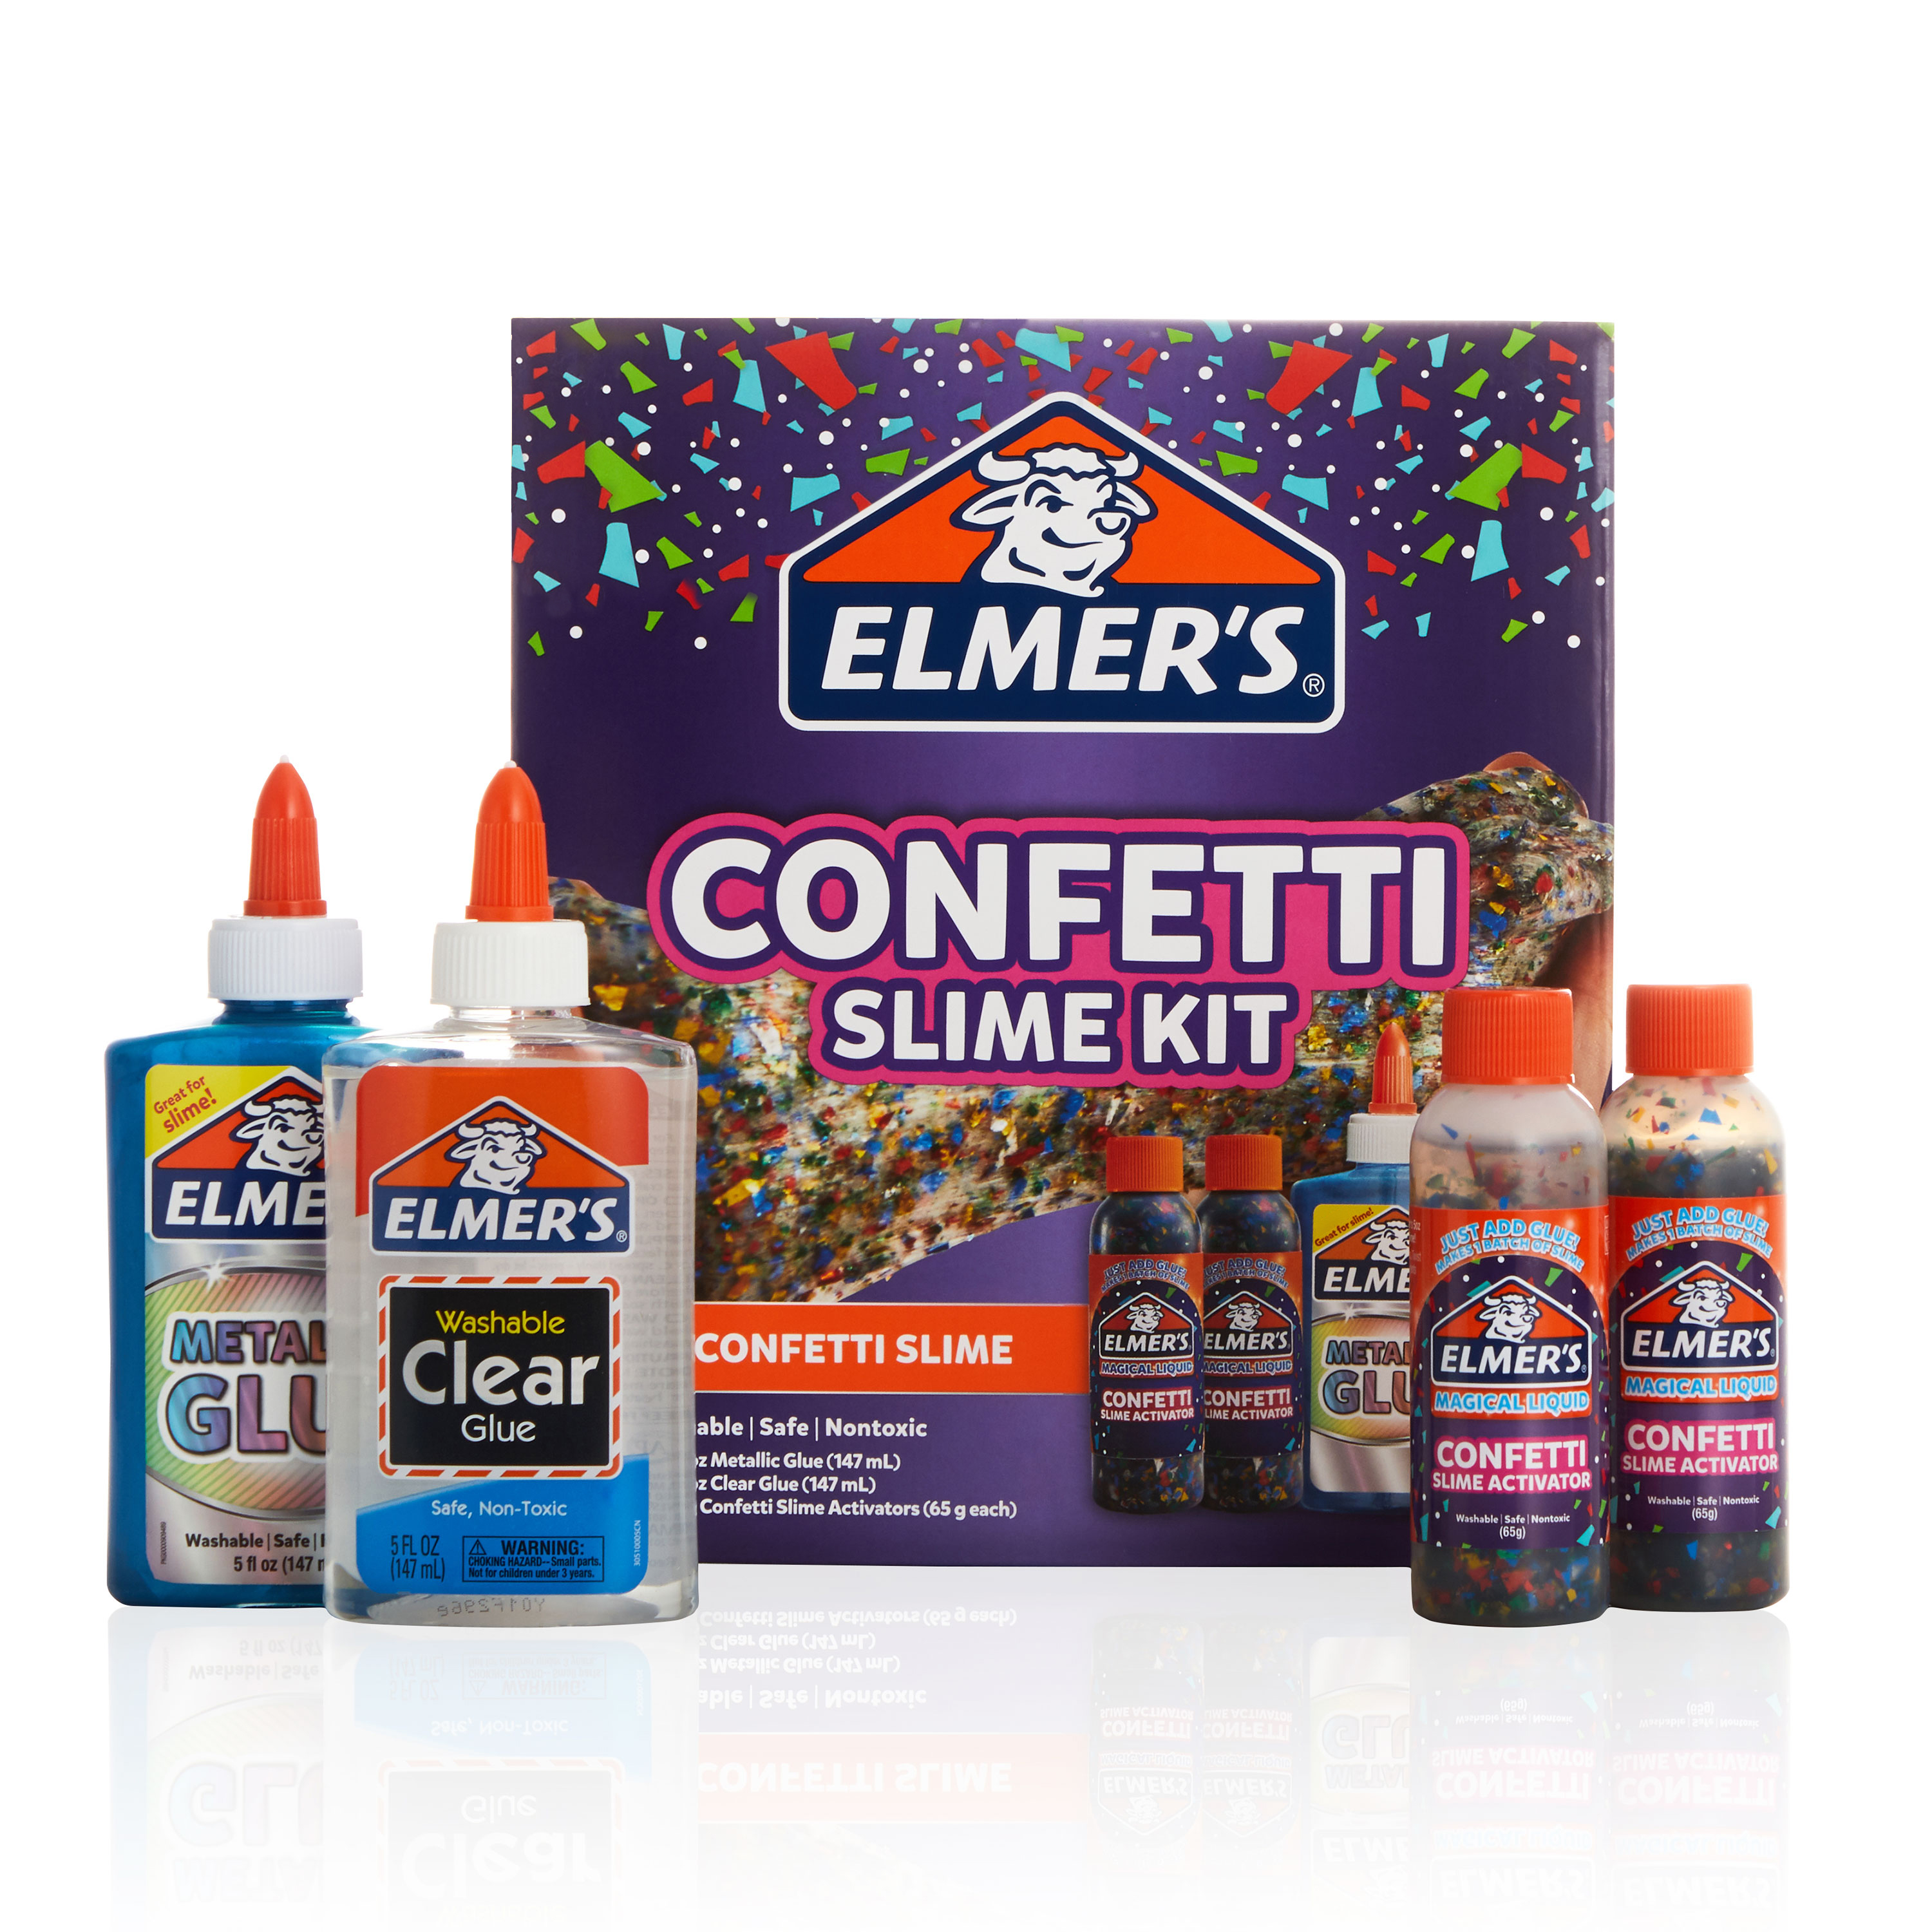 Elmer's Confetti Slime Kit: Supplies Include Metallic & Clear Glue, Confetti Magical Liquid Activator, 4 Count - image 1 of 6